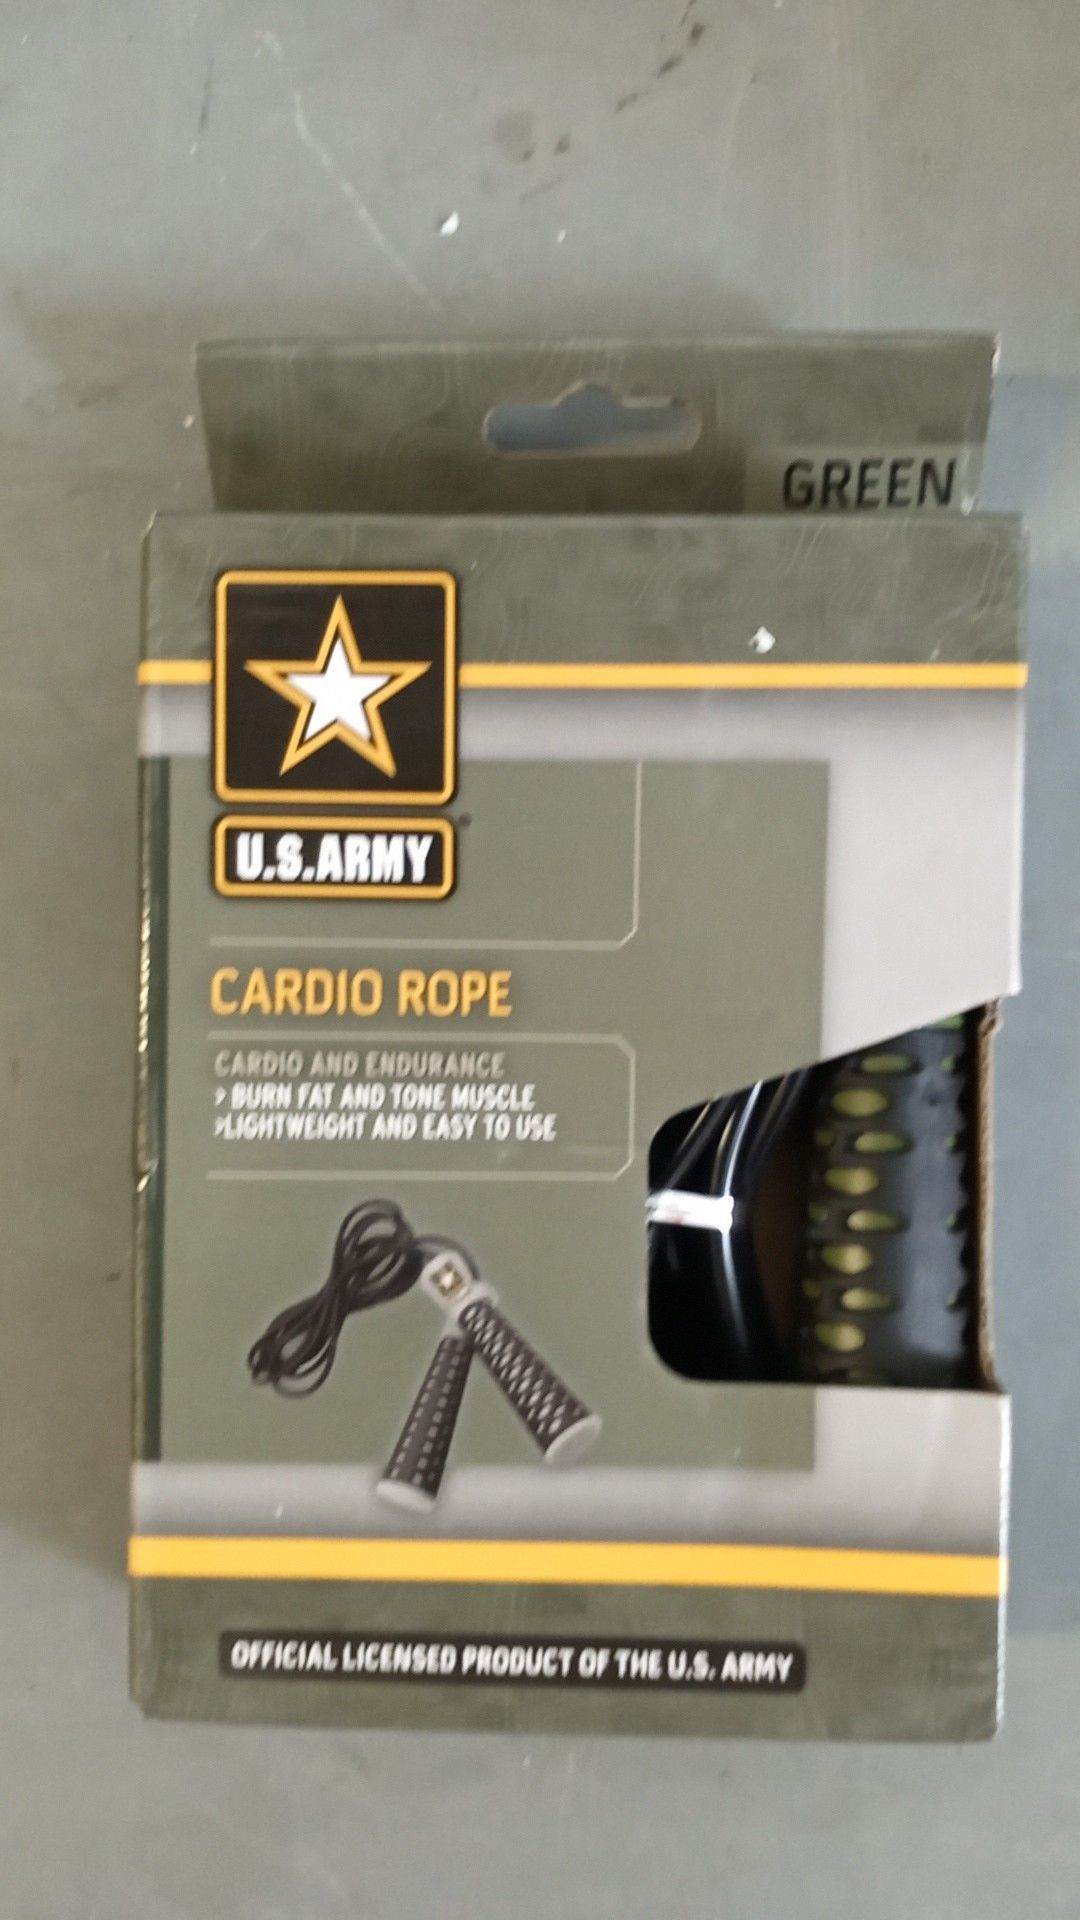 US army cardio rope